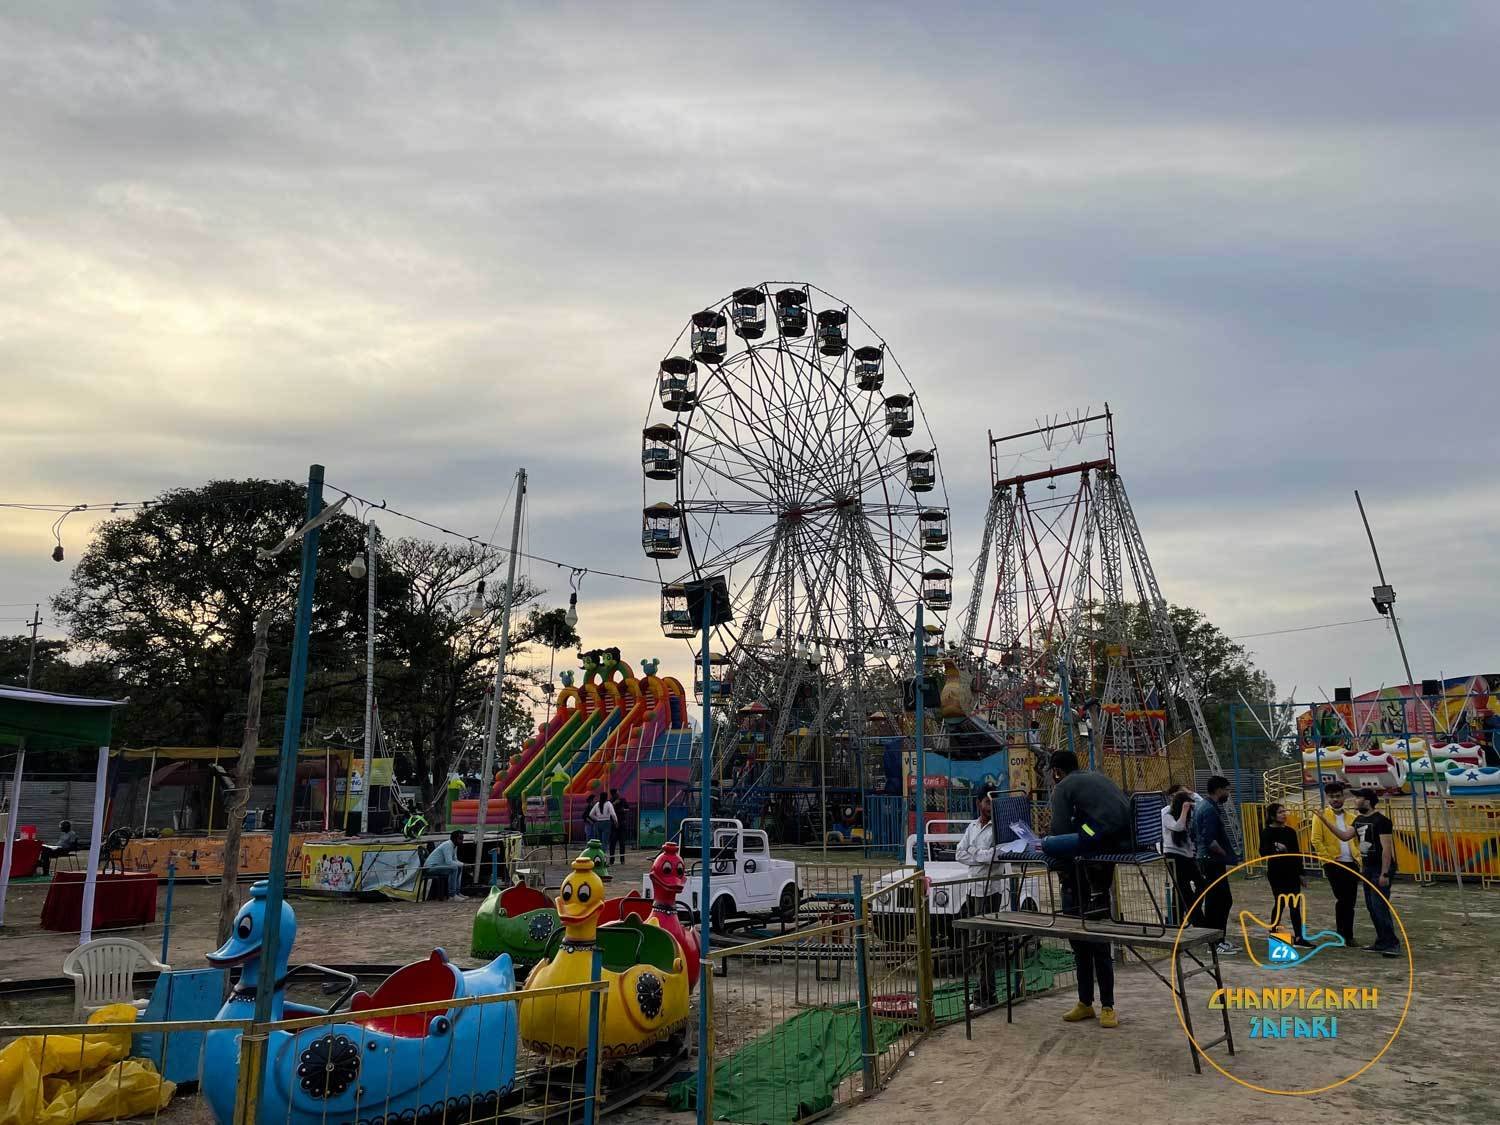 Chandigarh Safari - The Fair of Sector 34, Chandigarh